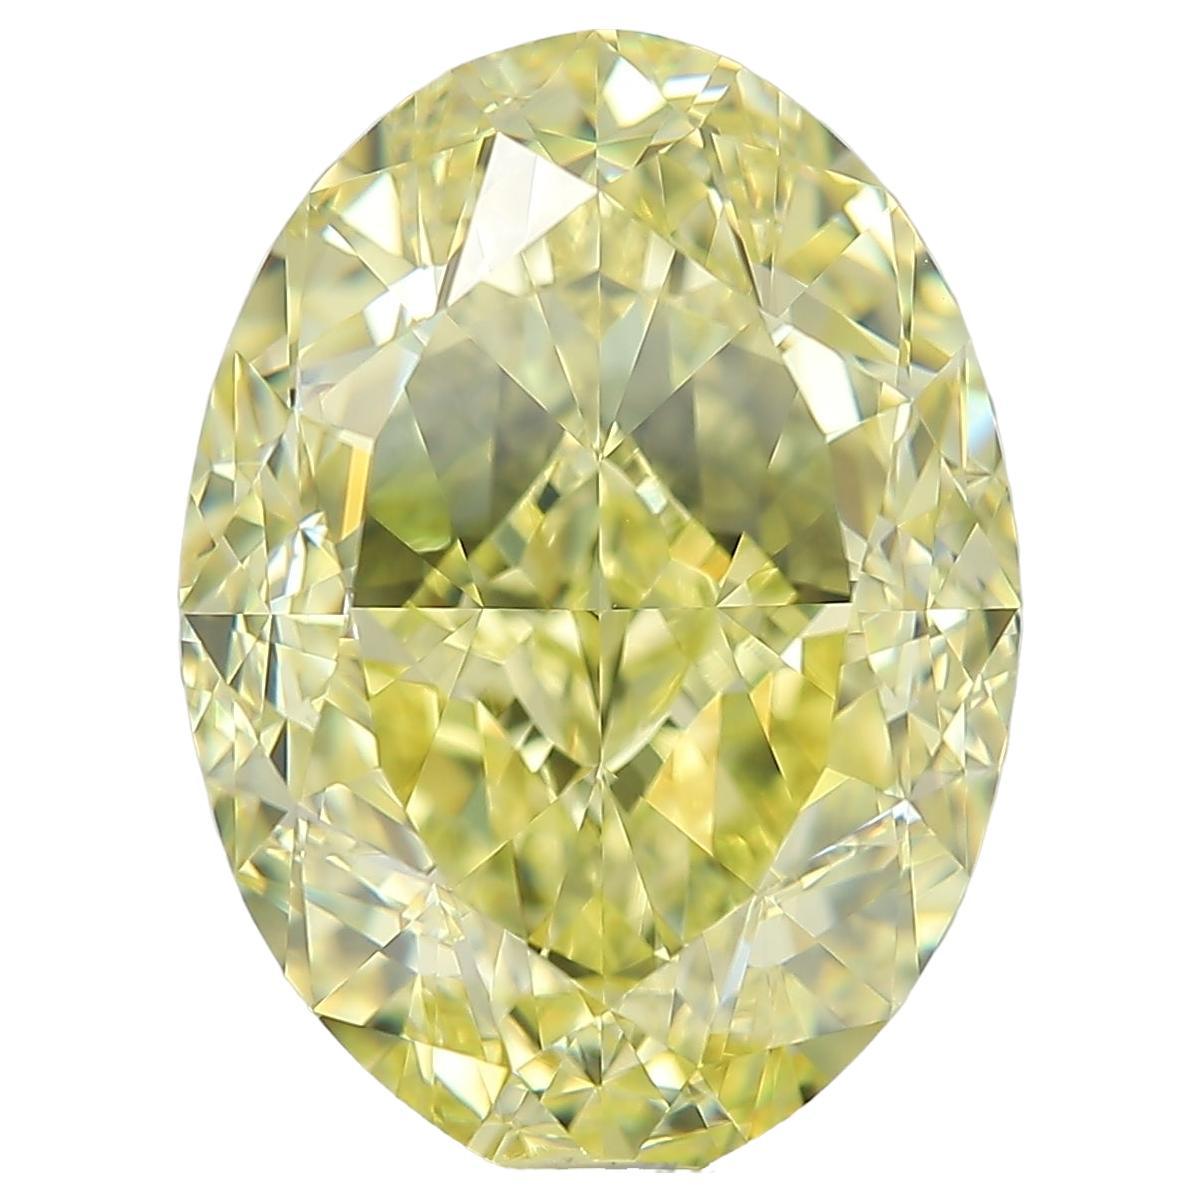 MEGHNA, diamant jaune intense de fantaisie ovale de 3,62 carats certifié GIA 